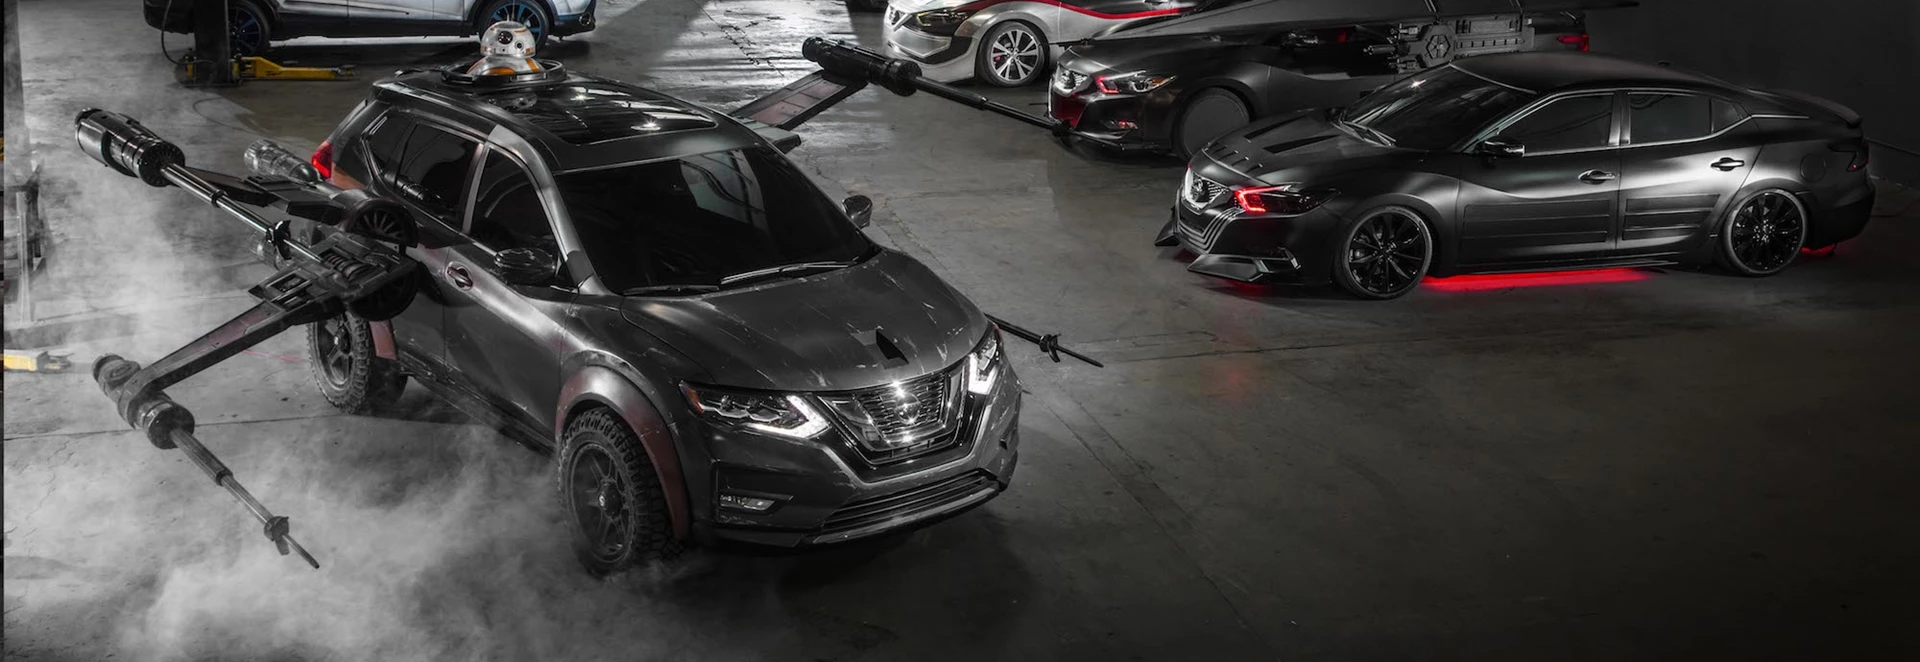 Nissan Star Wars: The Last Jedi-inspired vehicles